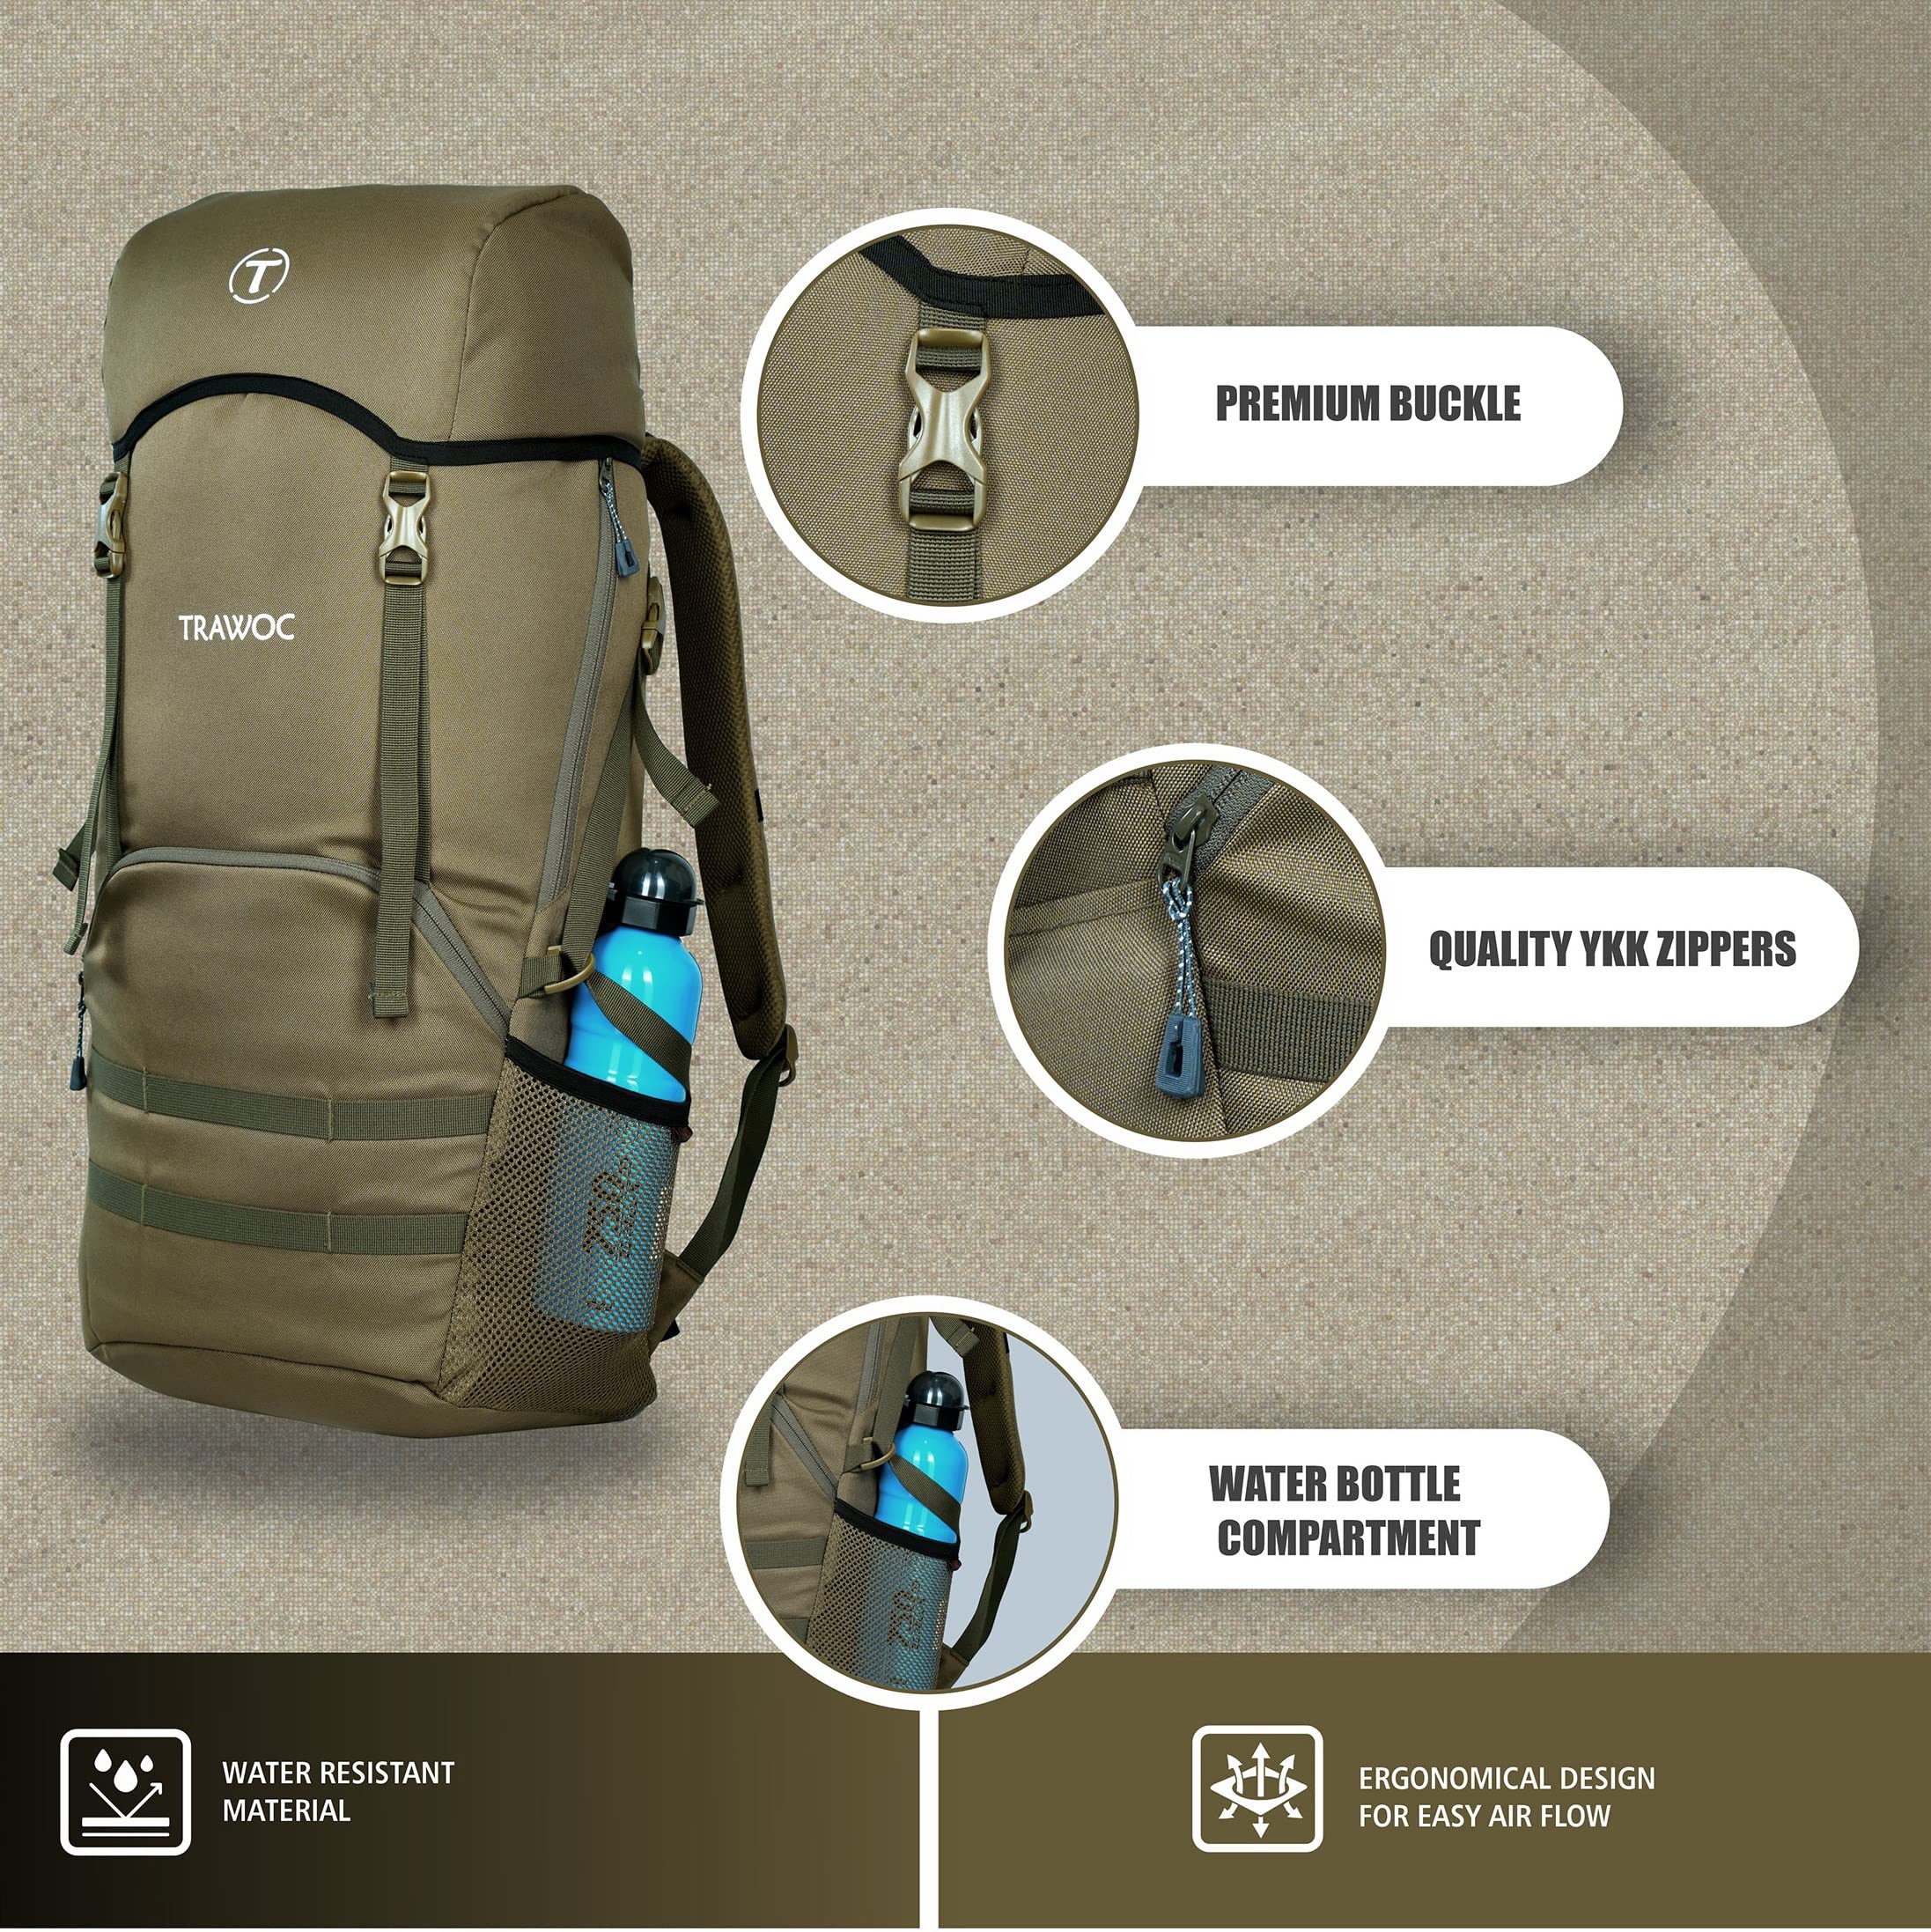 GLIDE-50 Backpack - Olivegreen (Renewed)